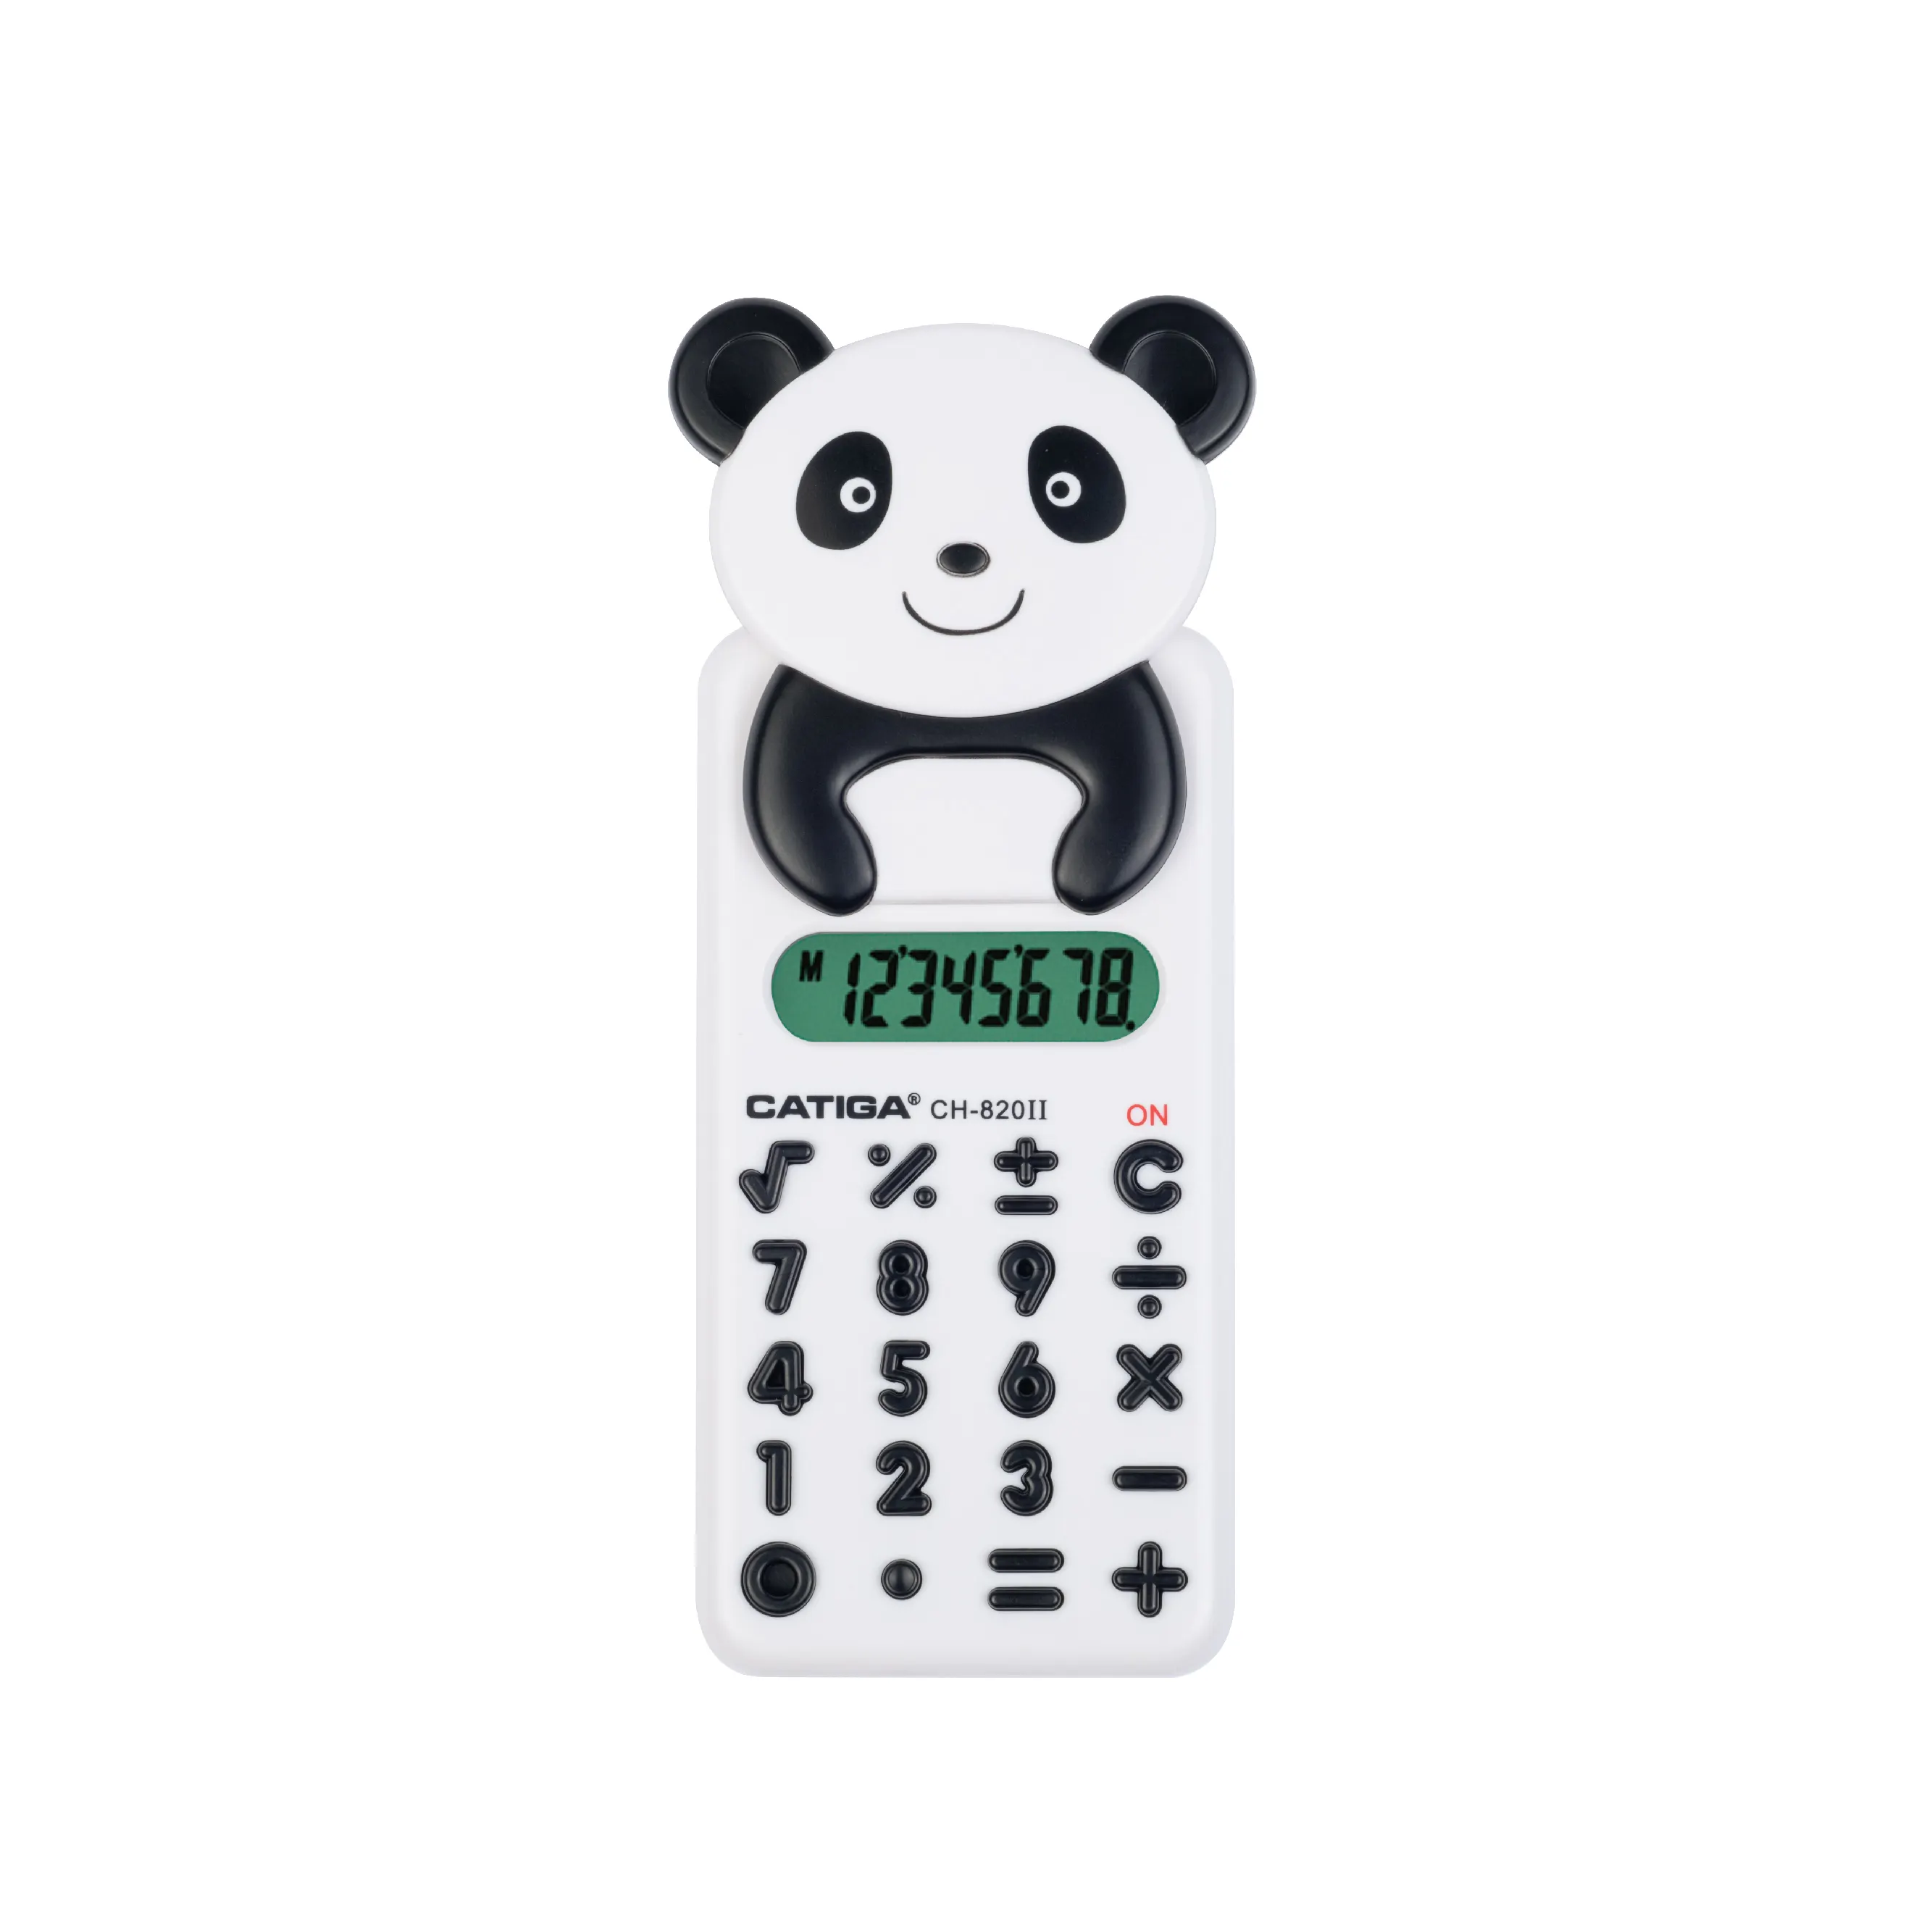 8 Digits Cartoon Appearance Panda Appearance CATIGA Solar Calculator Electronic Calculator Handheld Calculator